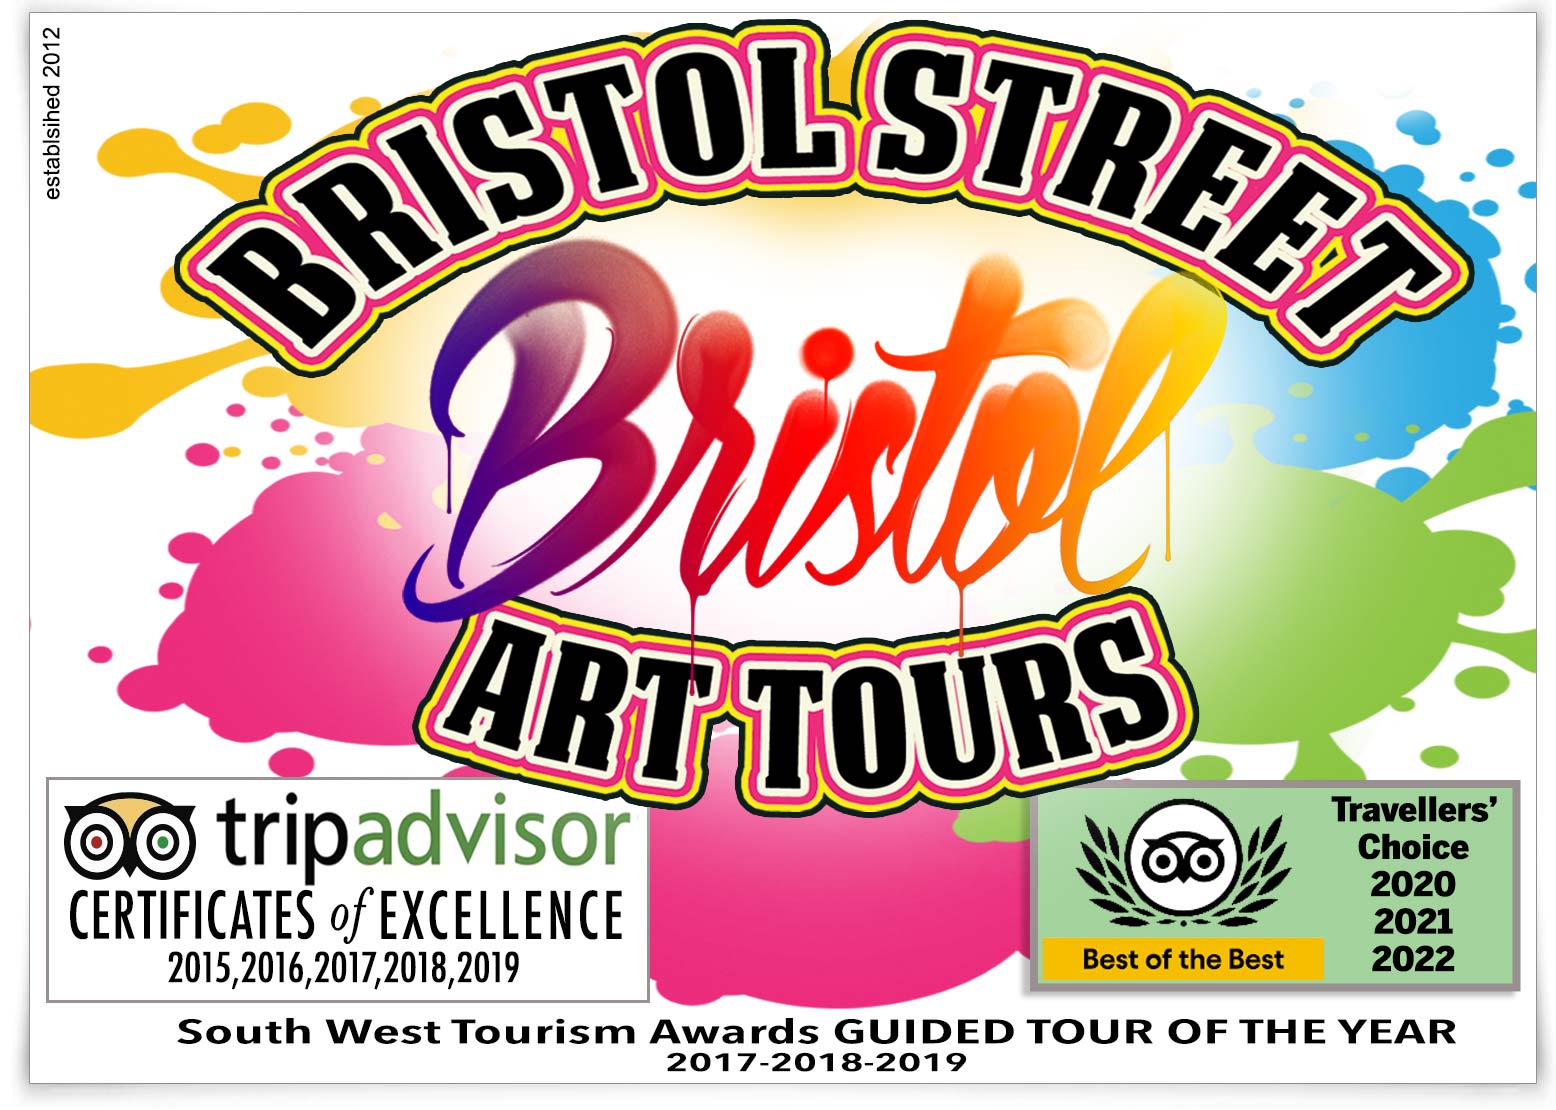 Bristol Street Art Tours